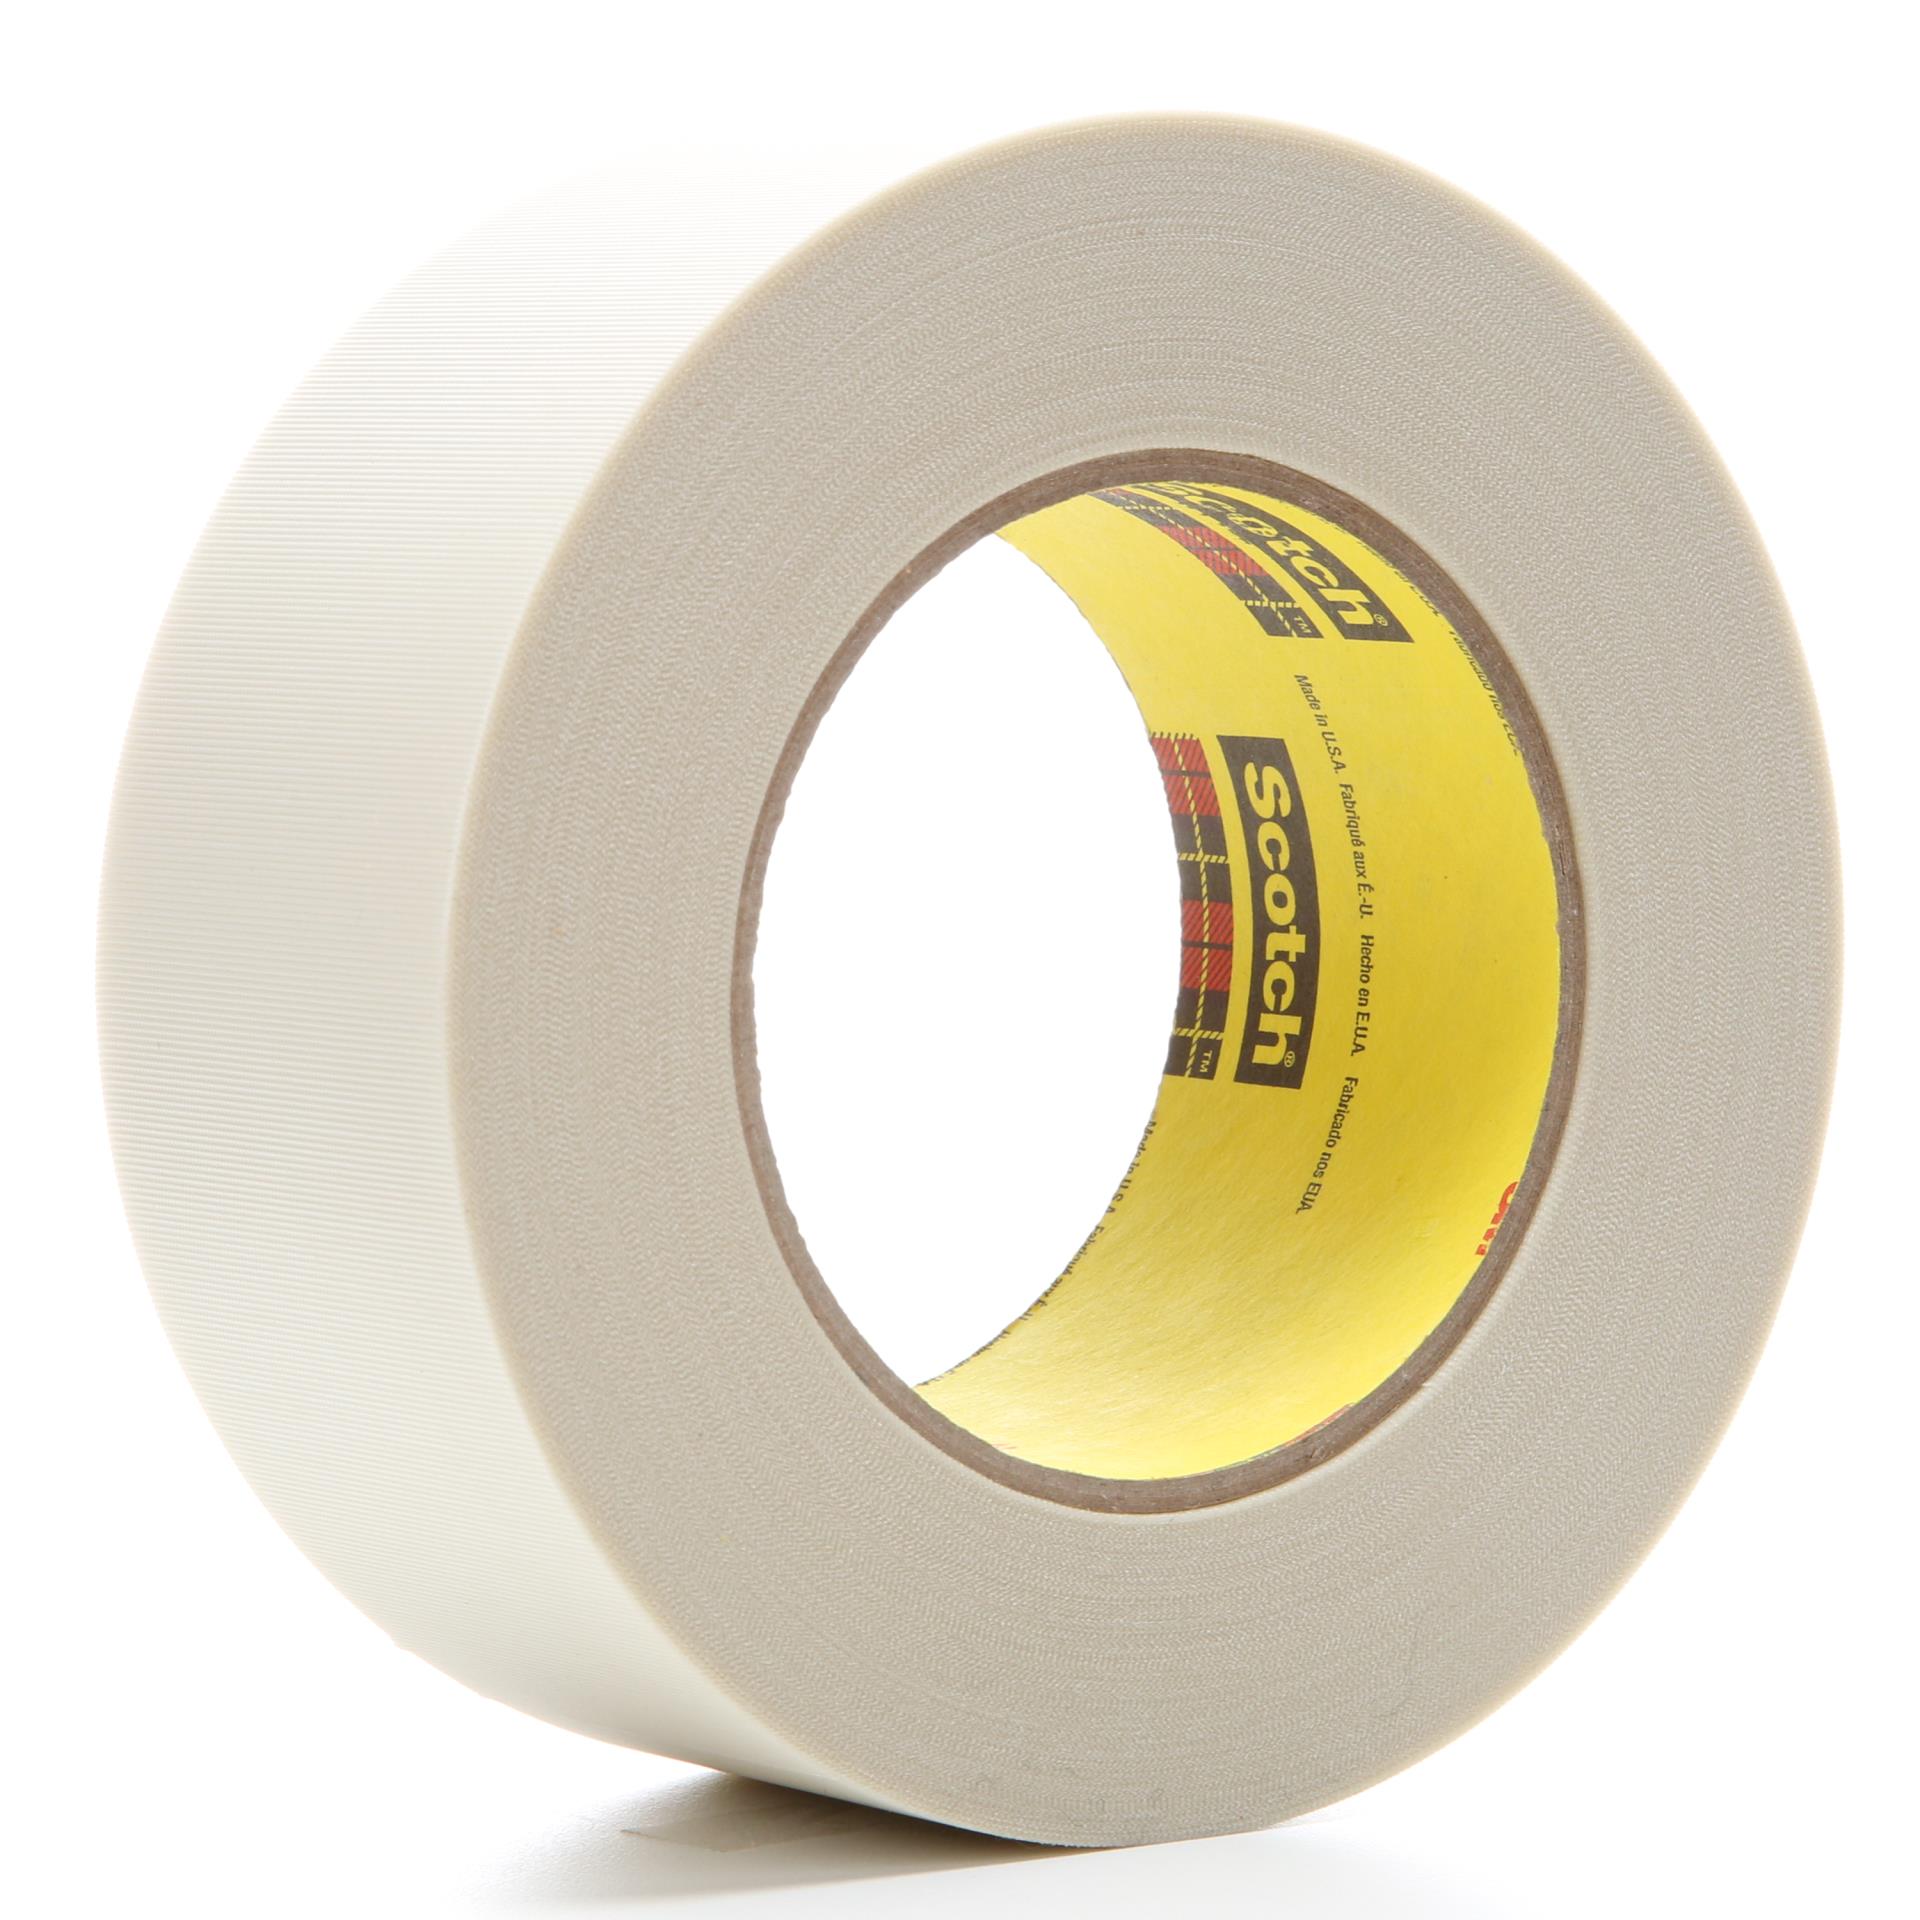 12.5 mm x 55M Pressure Sensitive Tape YELLOW  markings highlighting 